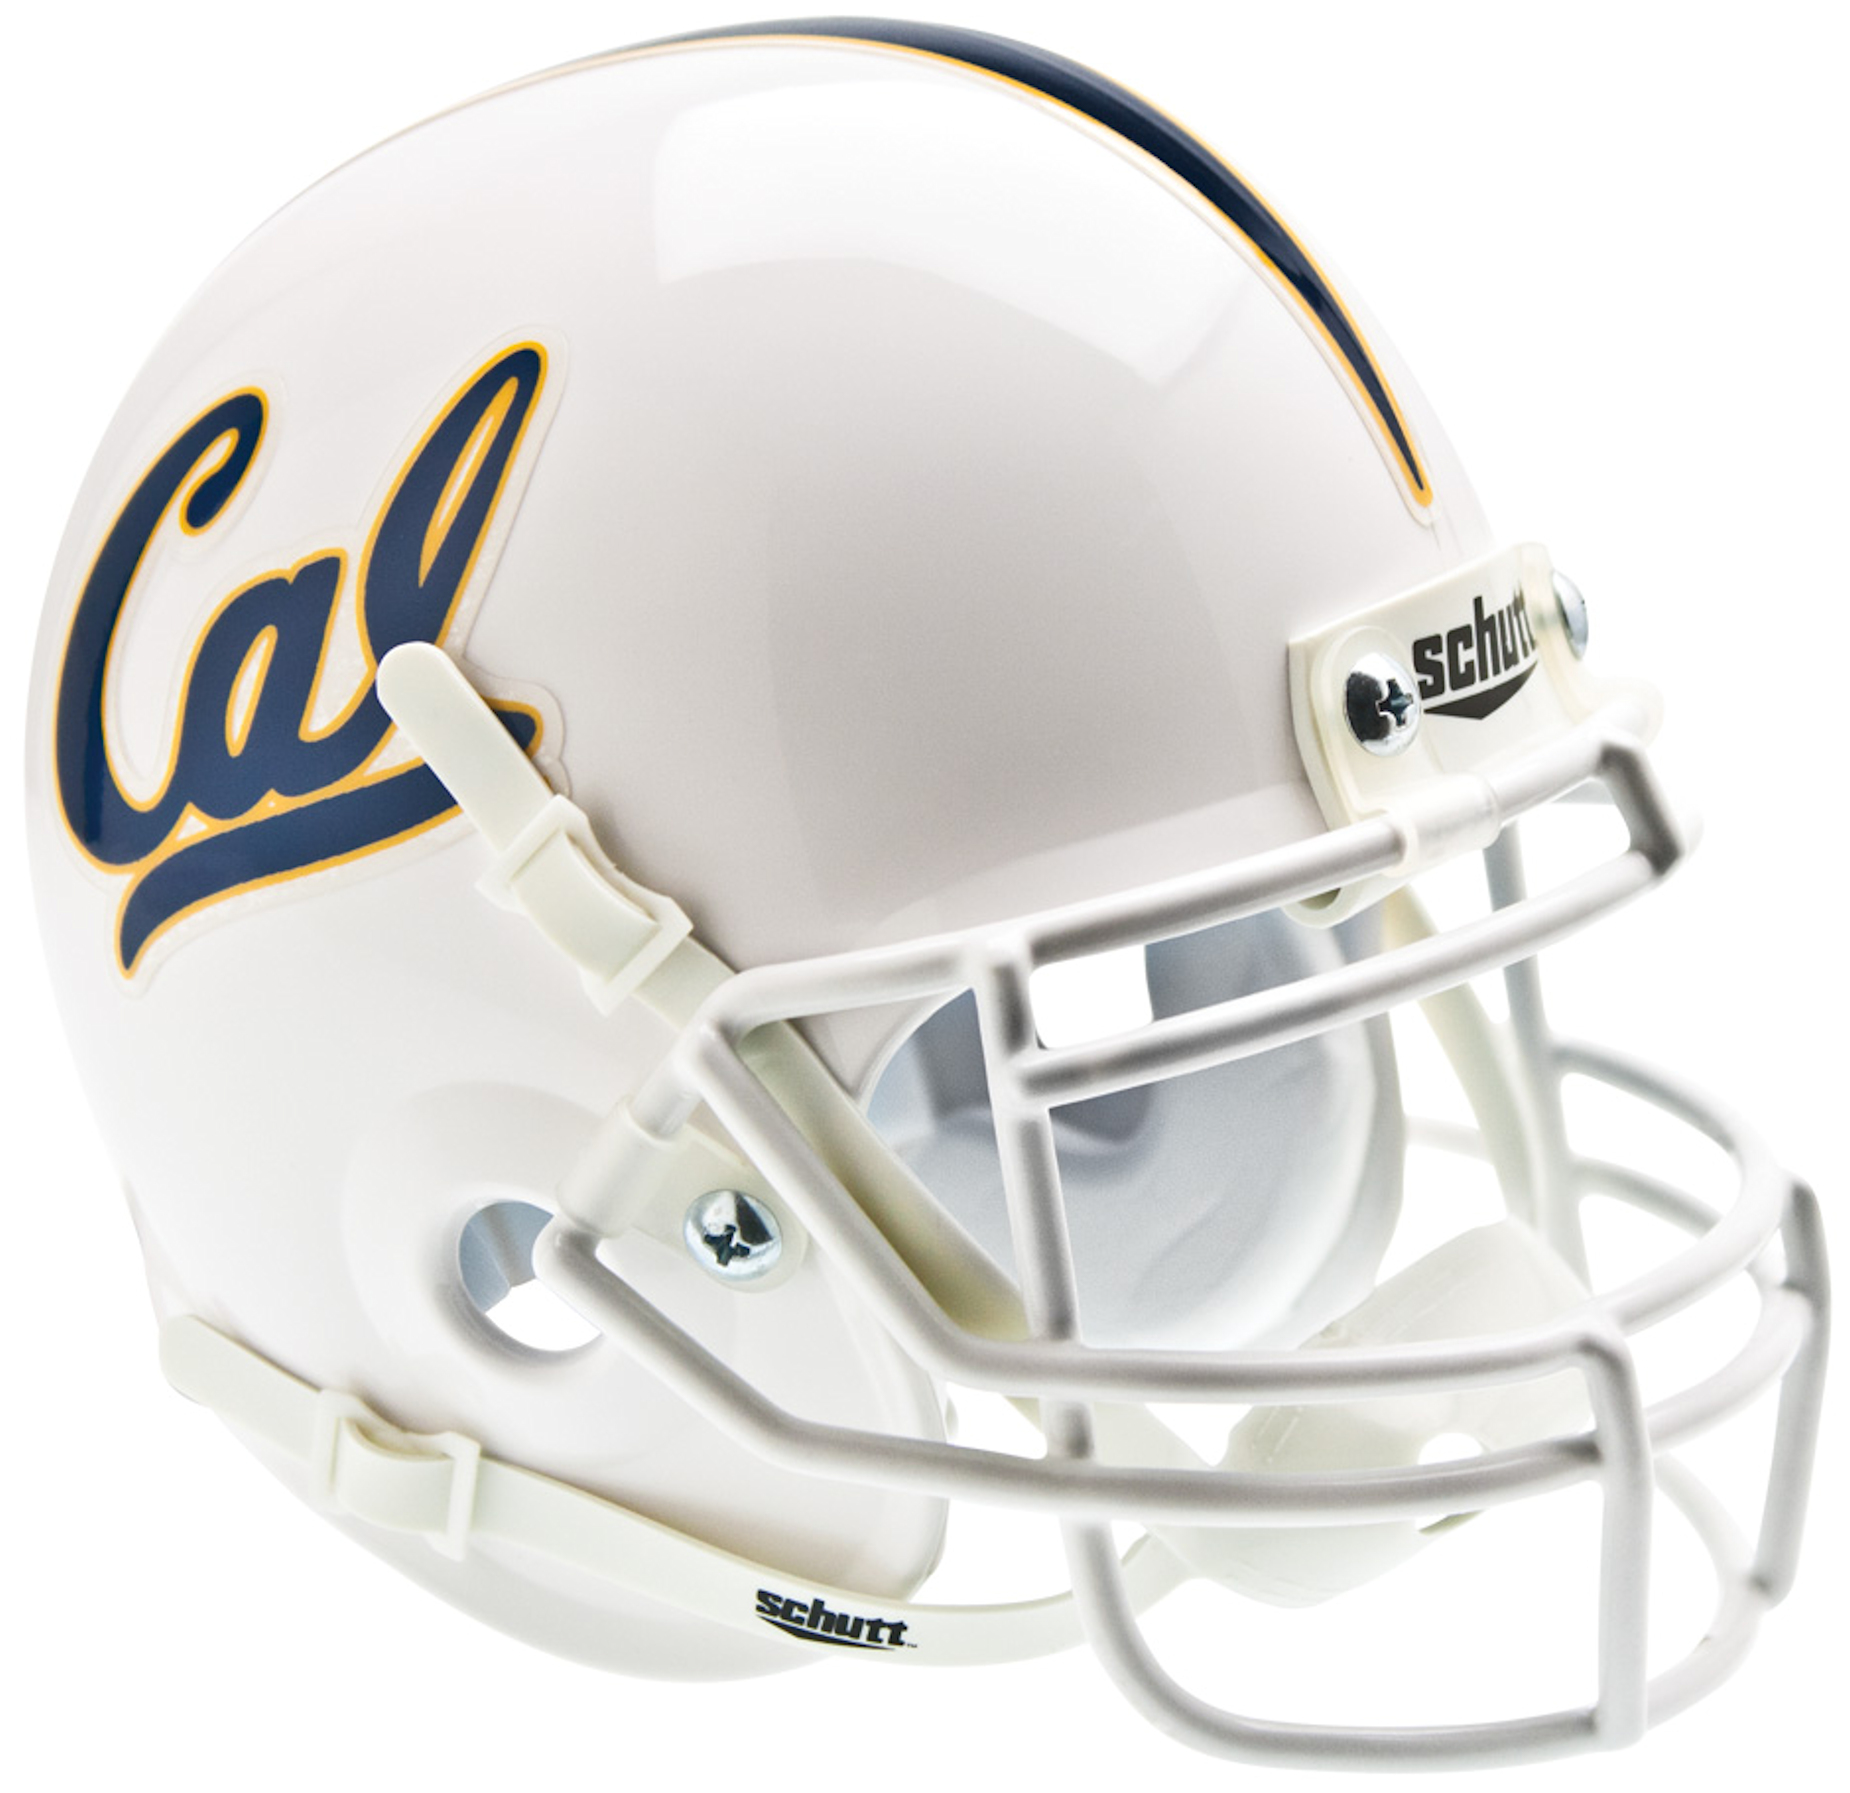 California (CAL) Golden Bears Mini XP Authentic Helmet Schutt <B>White</B>